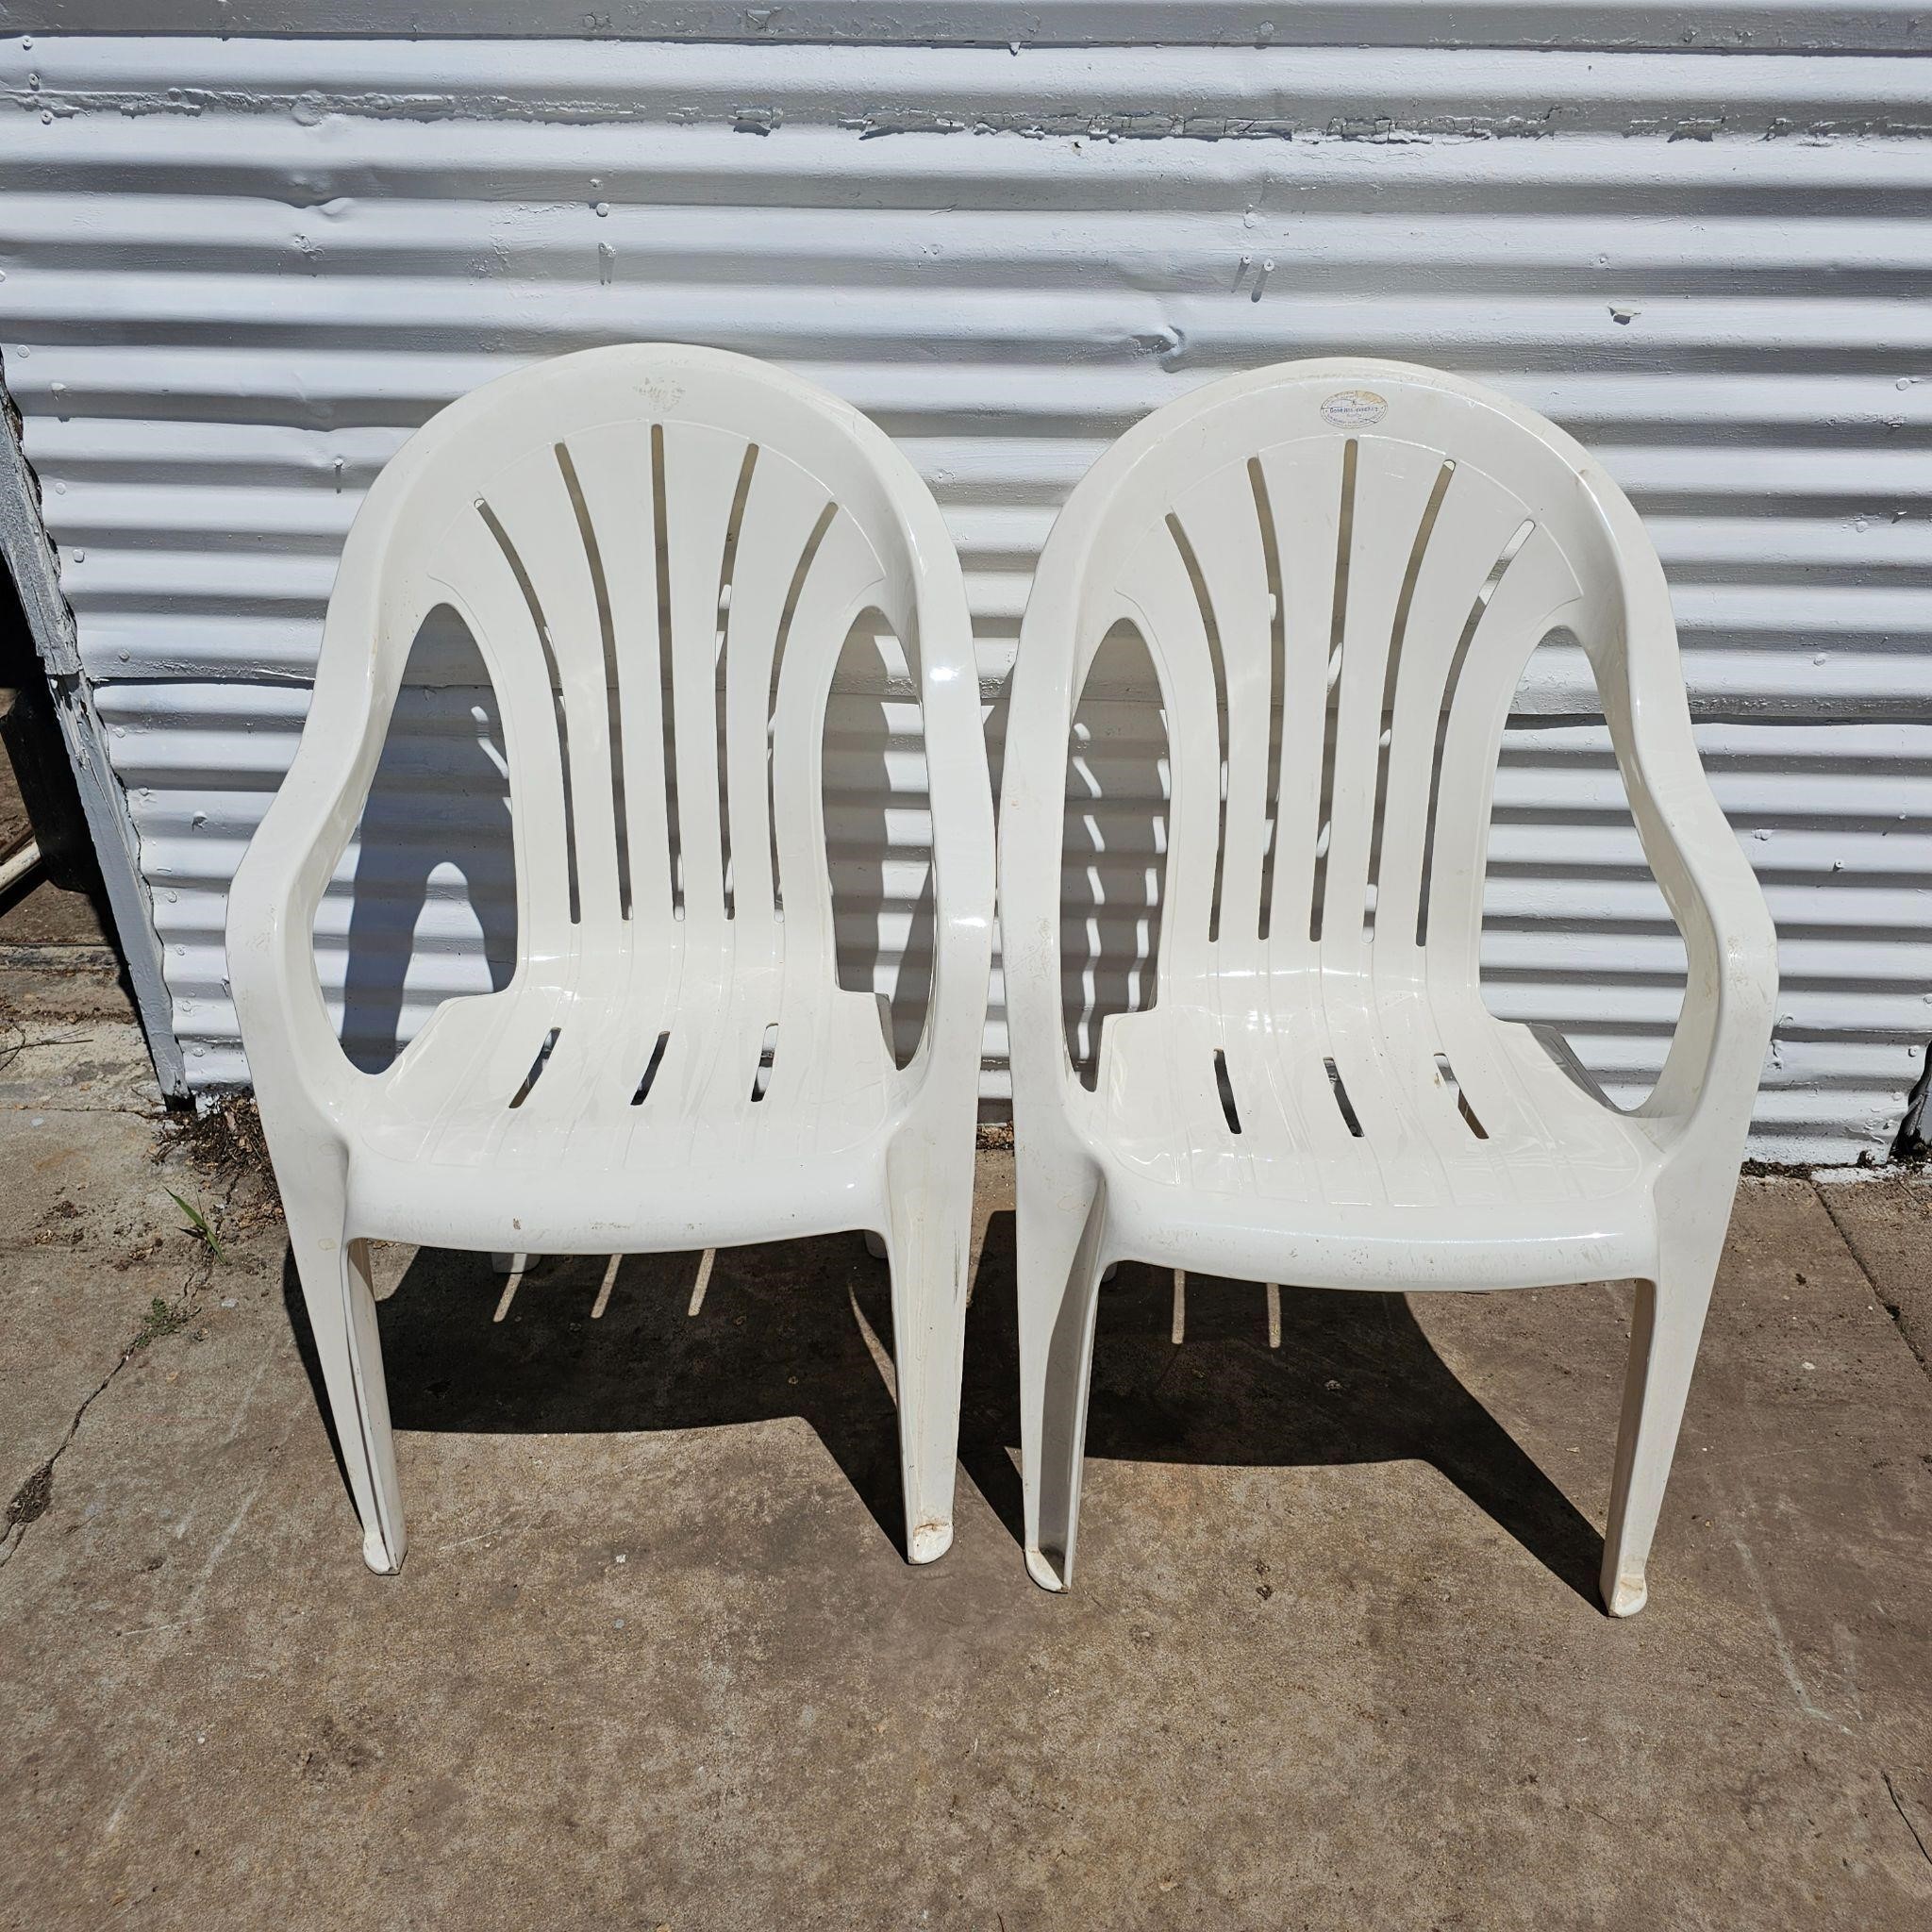 2 white plastic chairs